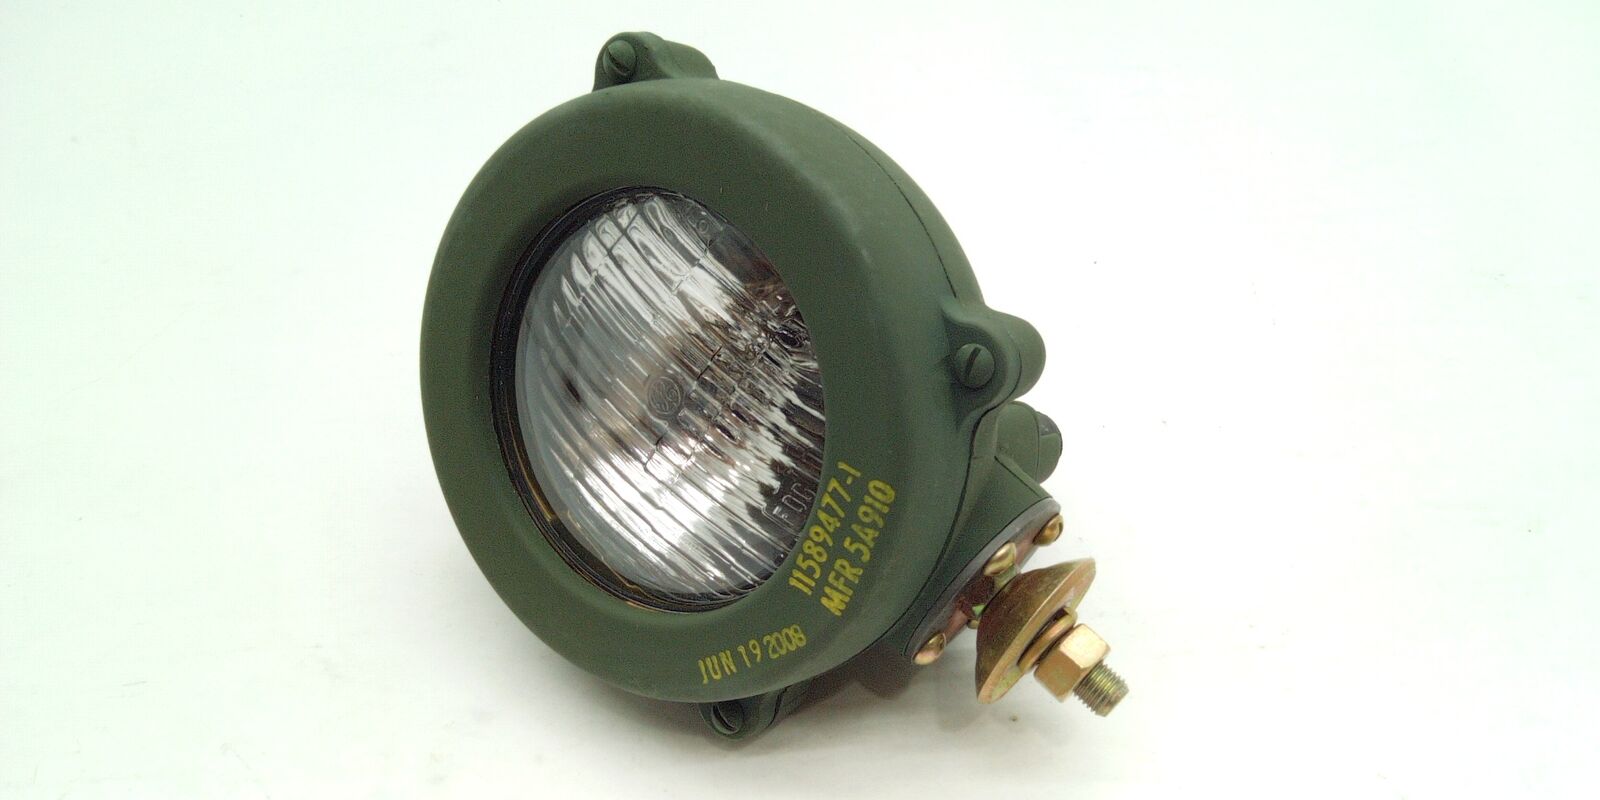 NOS Military Green Hmmwv 24v Armored Headlight Lamp Light Round 11589477